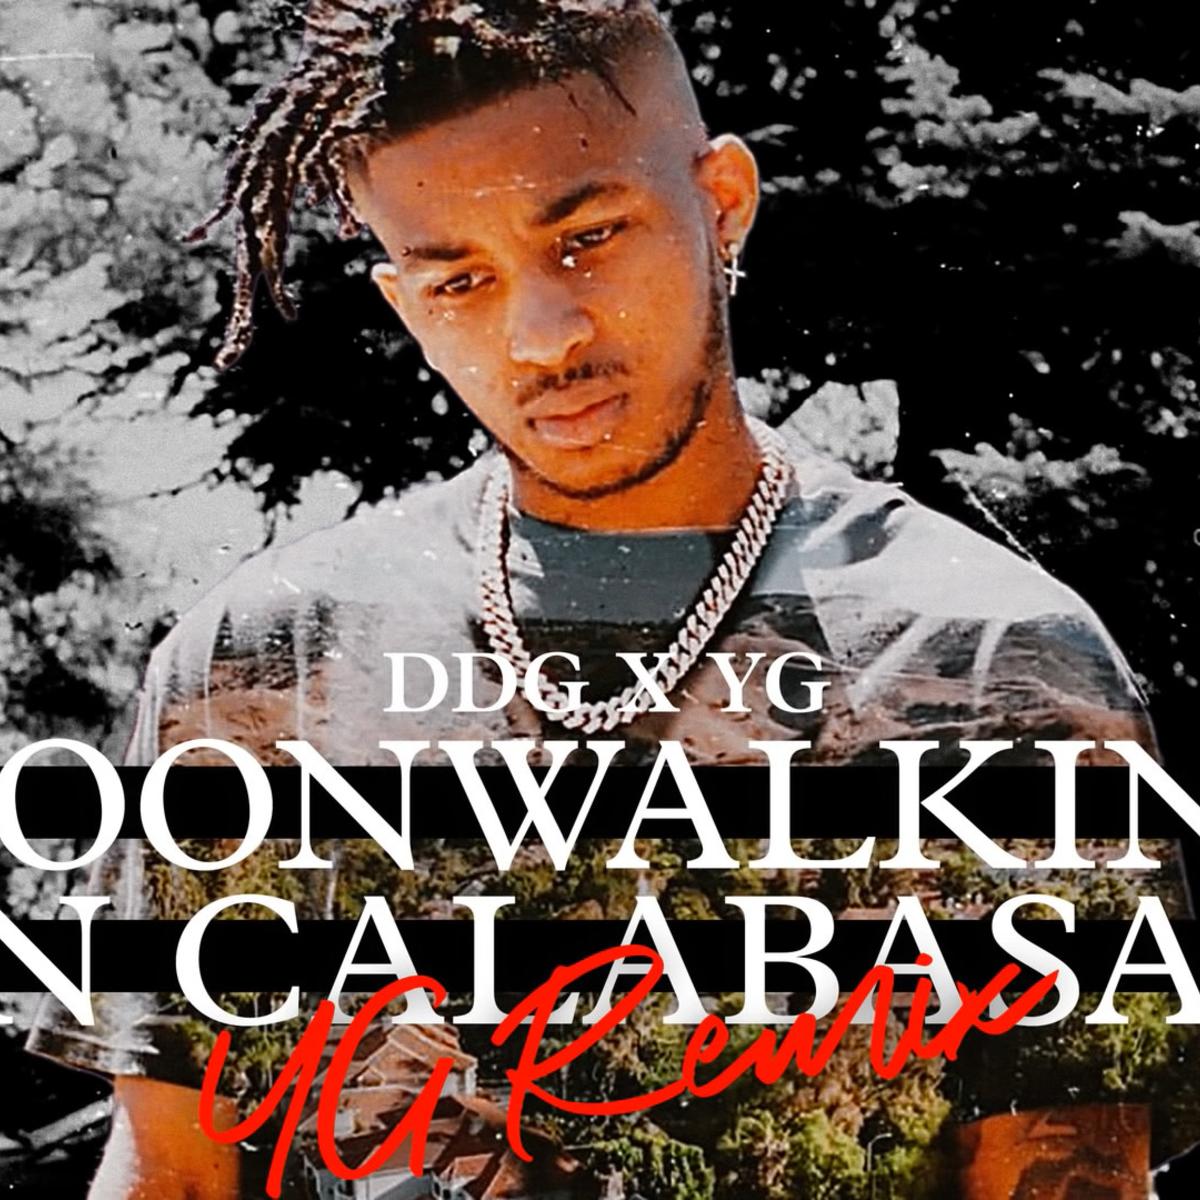 DDG Recruits YG For A Remix To “Moonwalking In Calabasas”